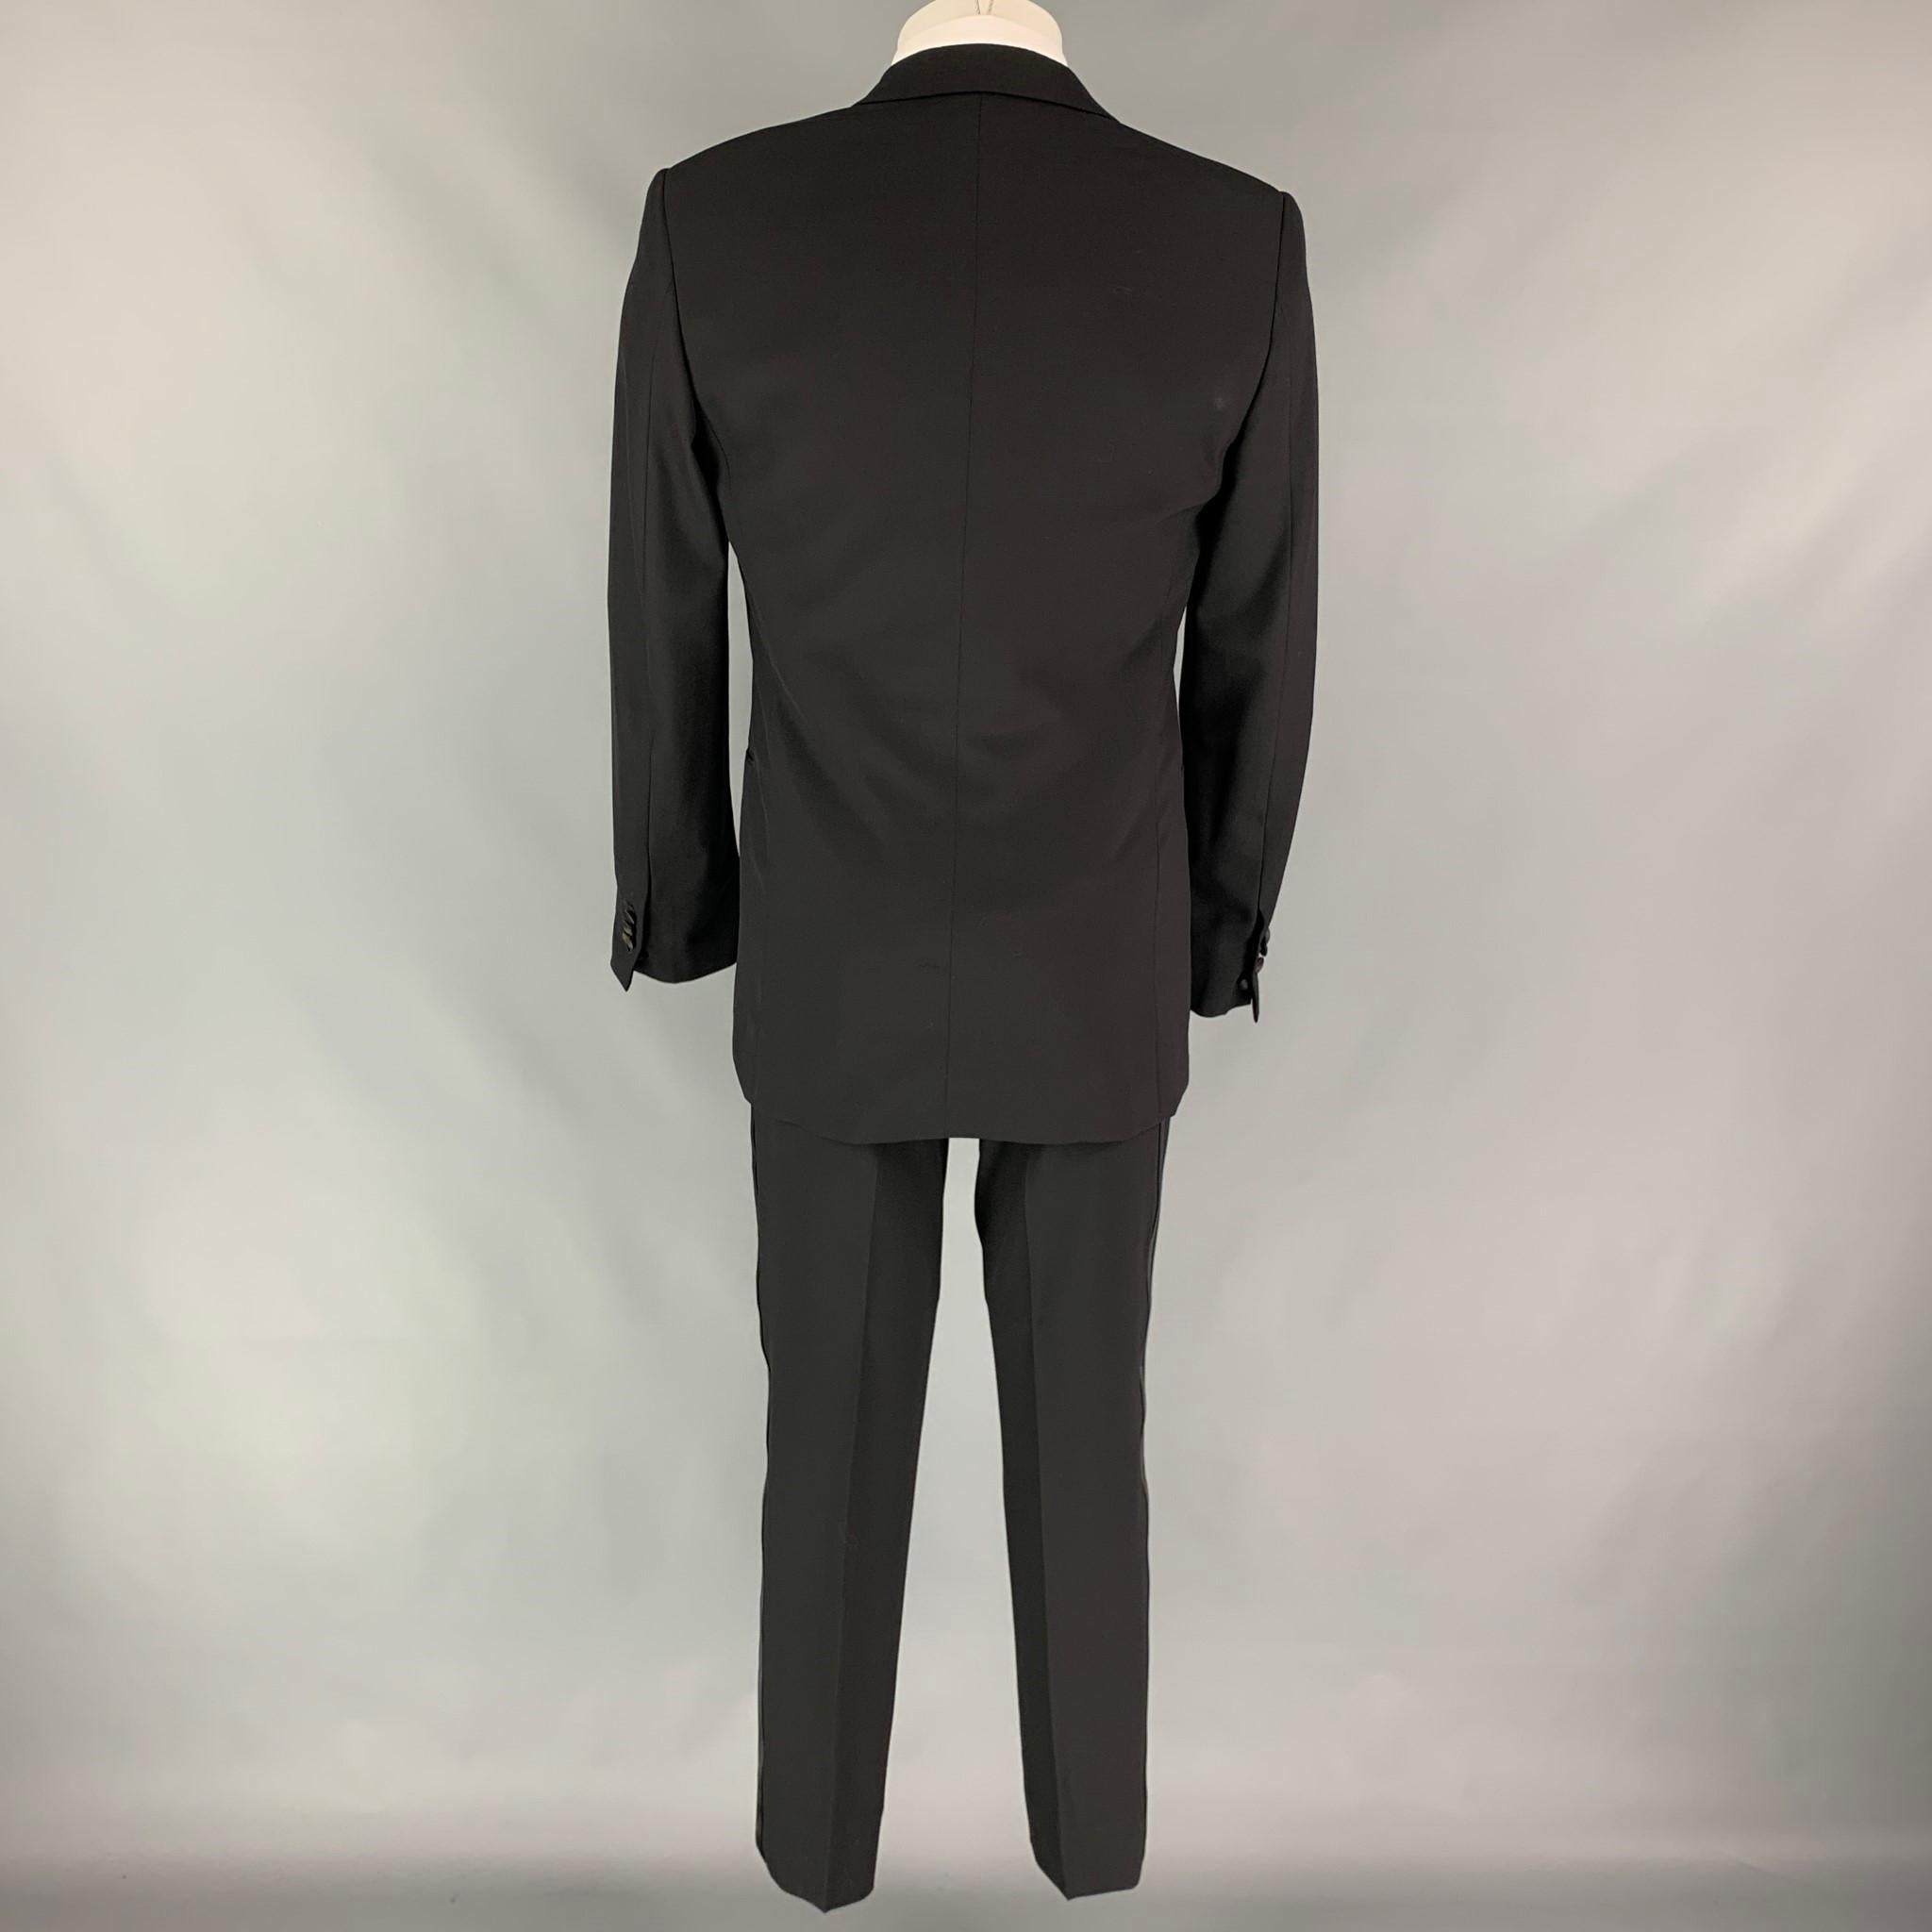 ralph lauren black label suit